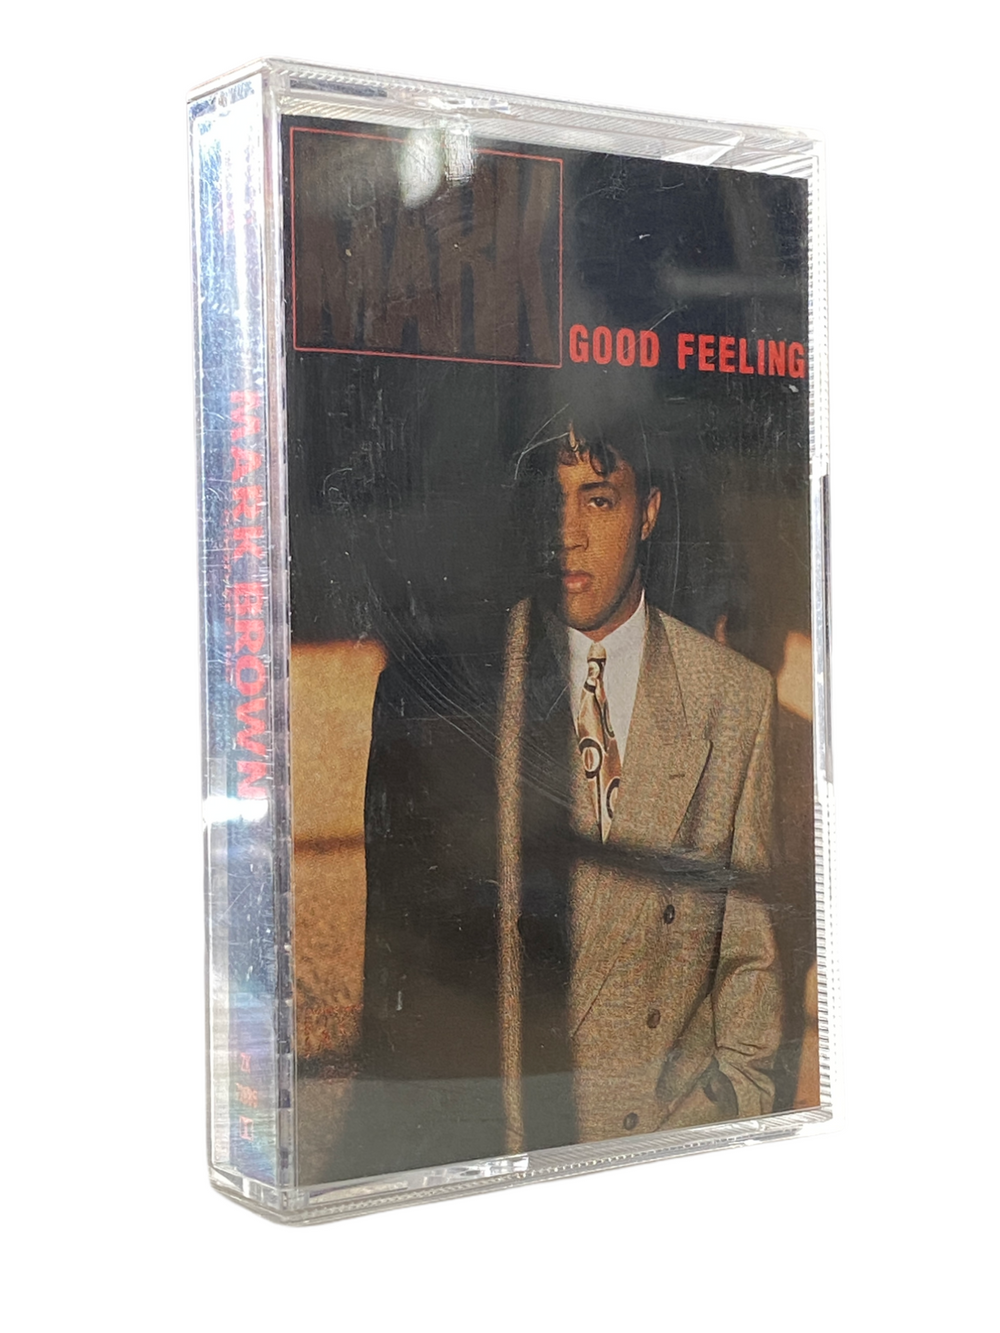 Prince – Brownmark Good Feeling Original Cassette Tape 1989 UK Release Prince